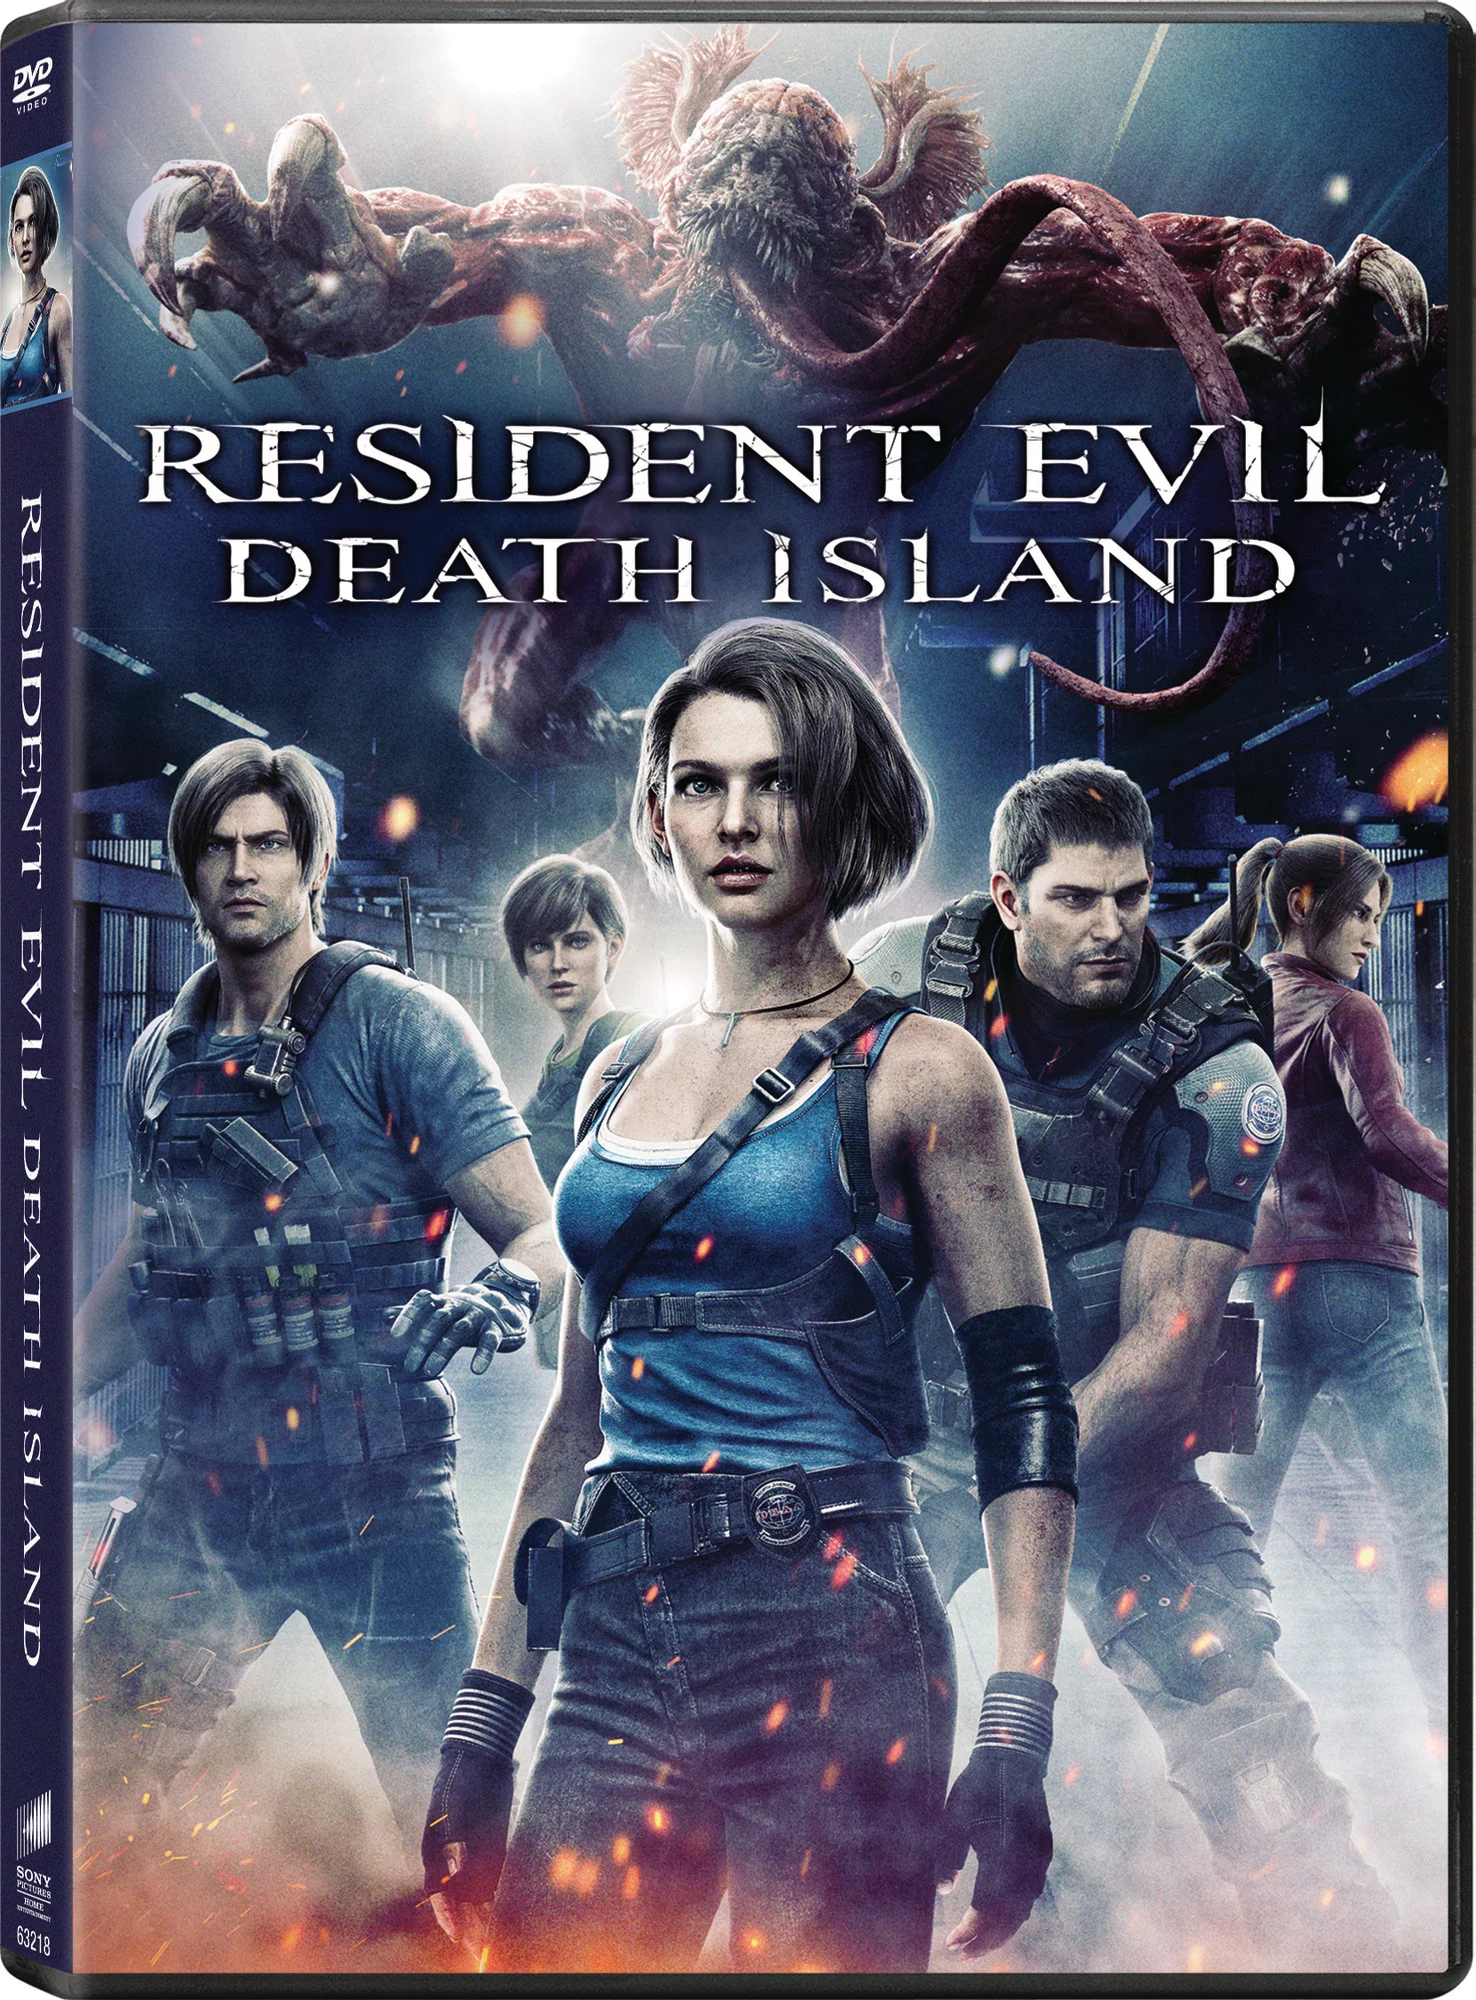 RESIDENT EVIL 5 Retribution Trailer 2 - 2012 Movie - Official [HD